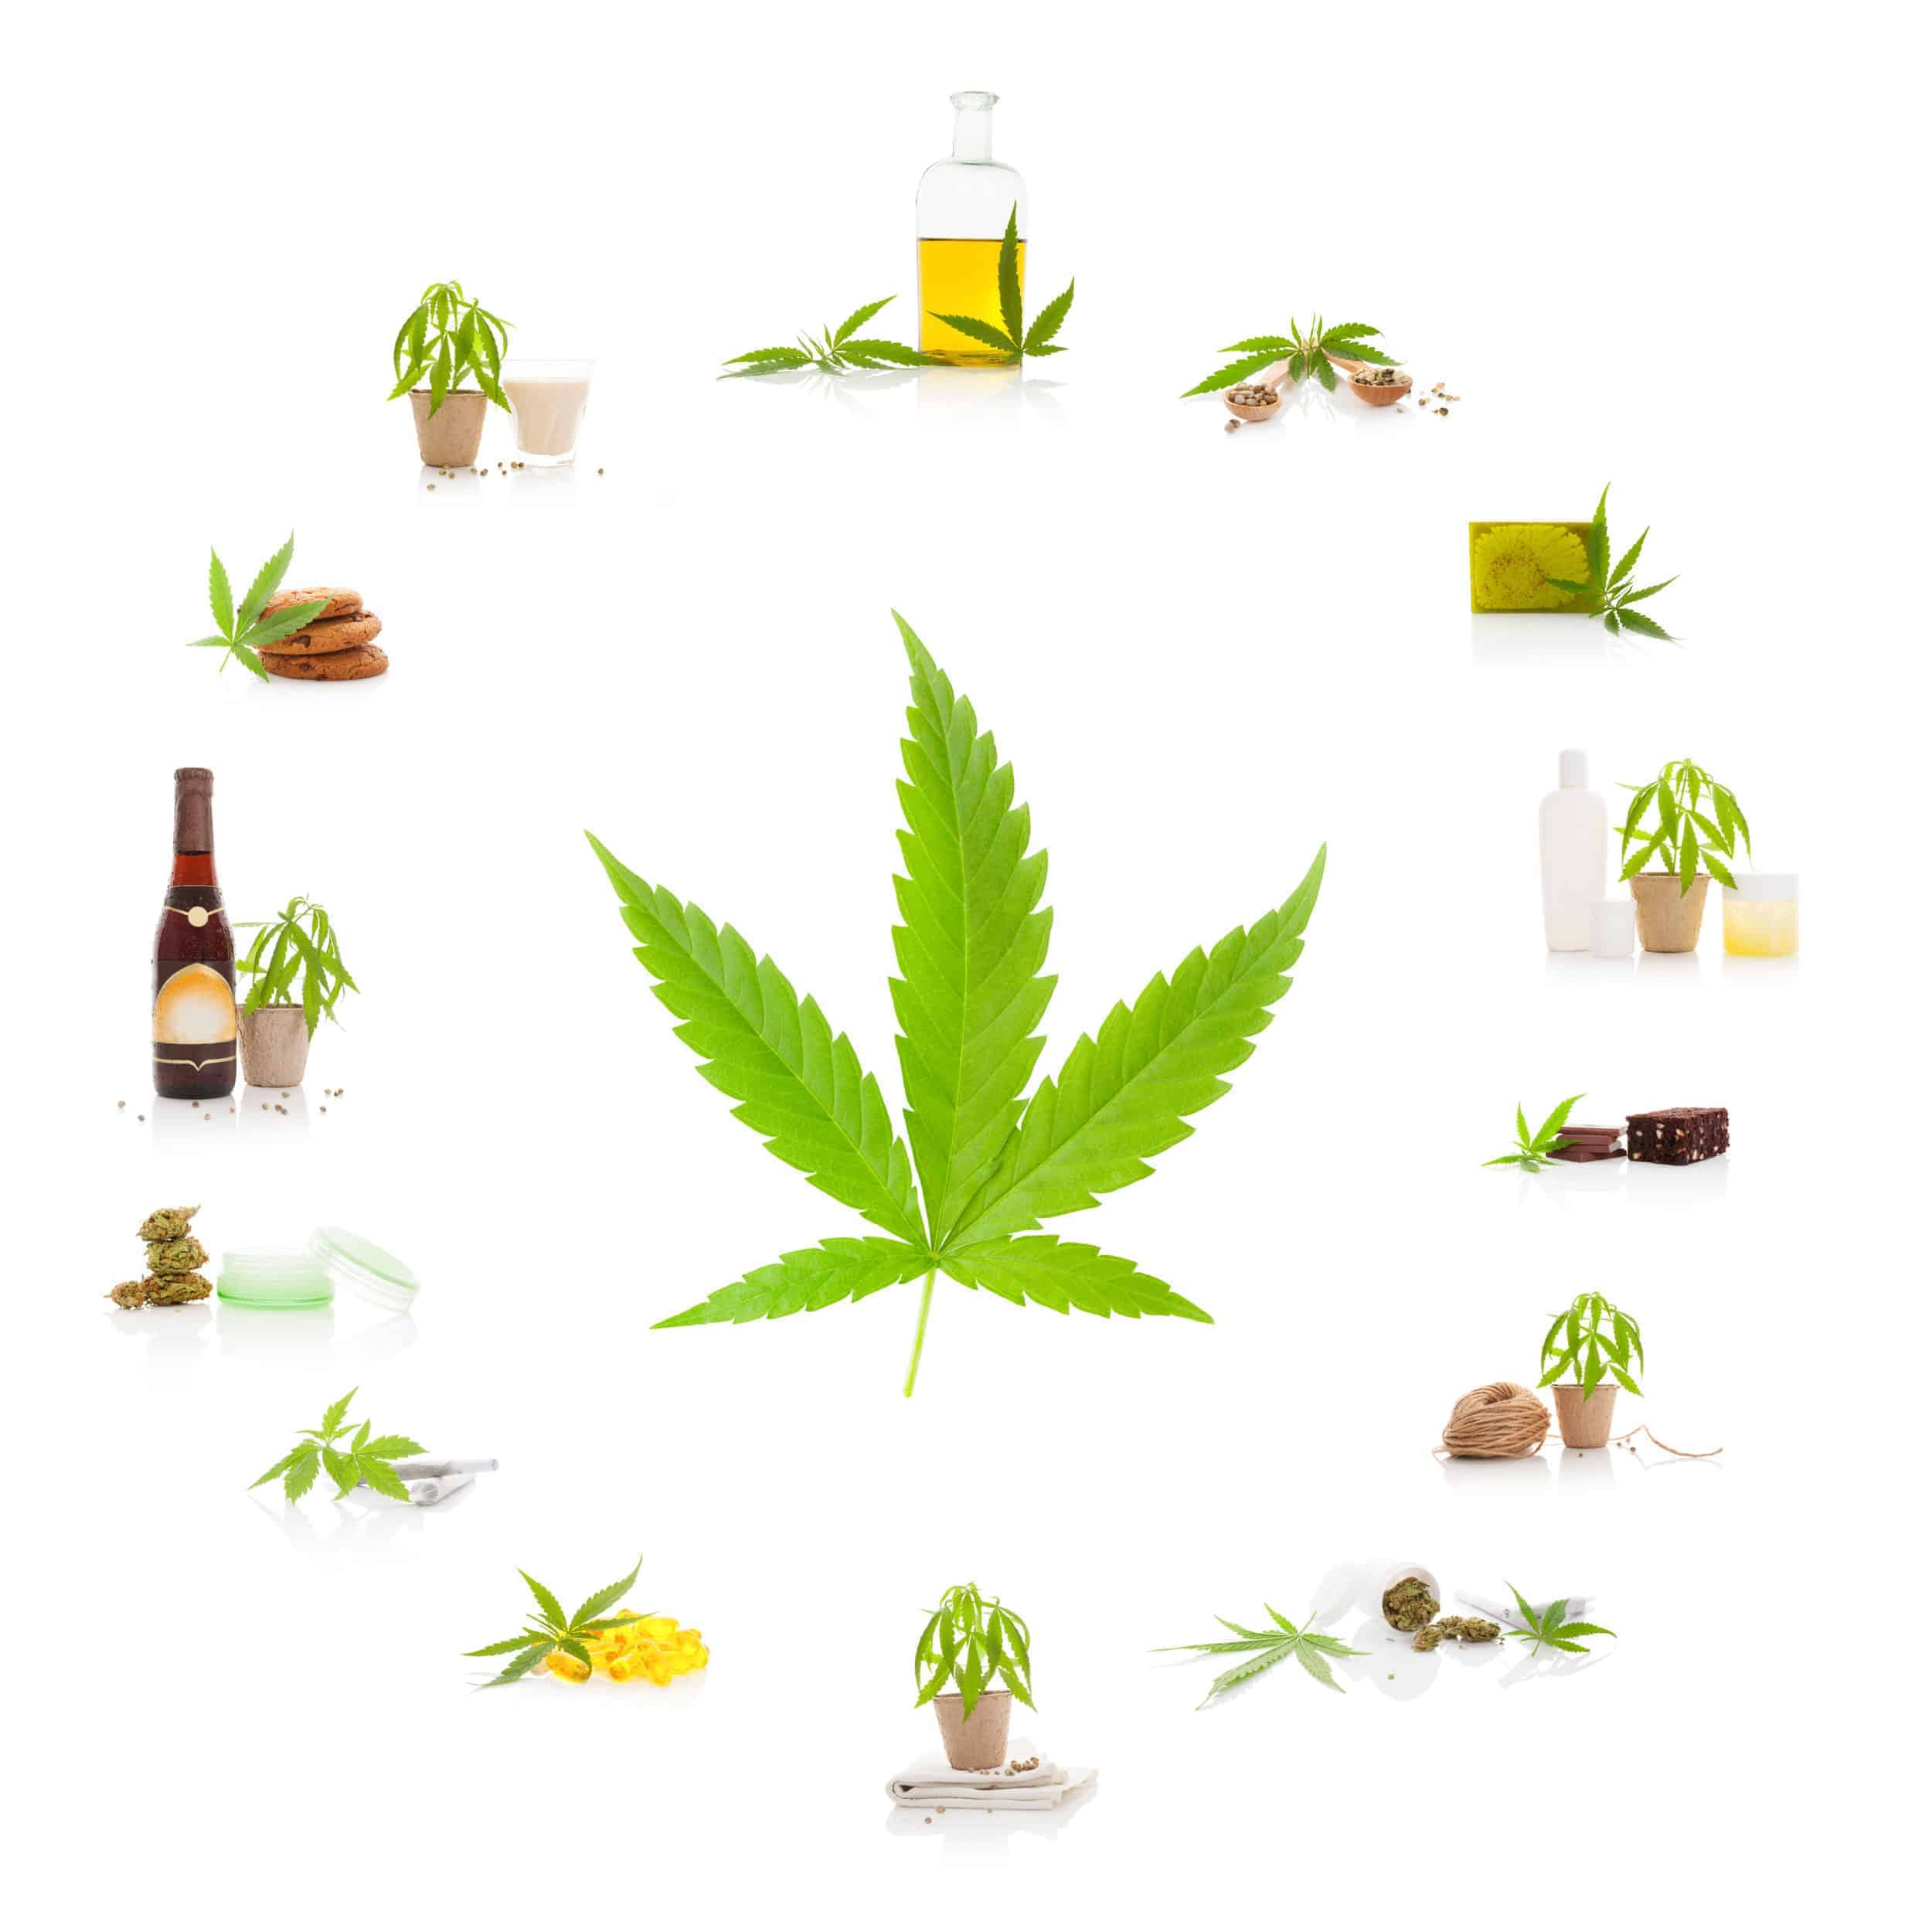 Full Spectrum of Cannabis flower oil and hemp